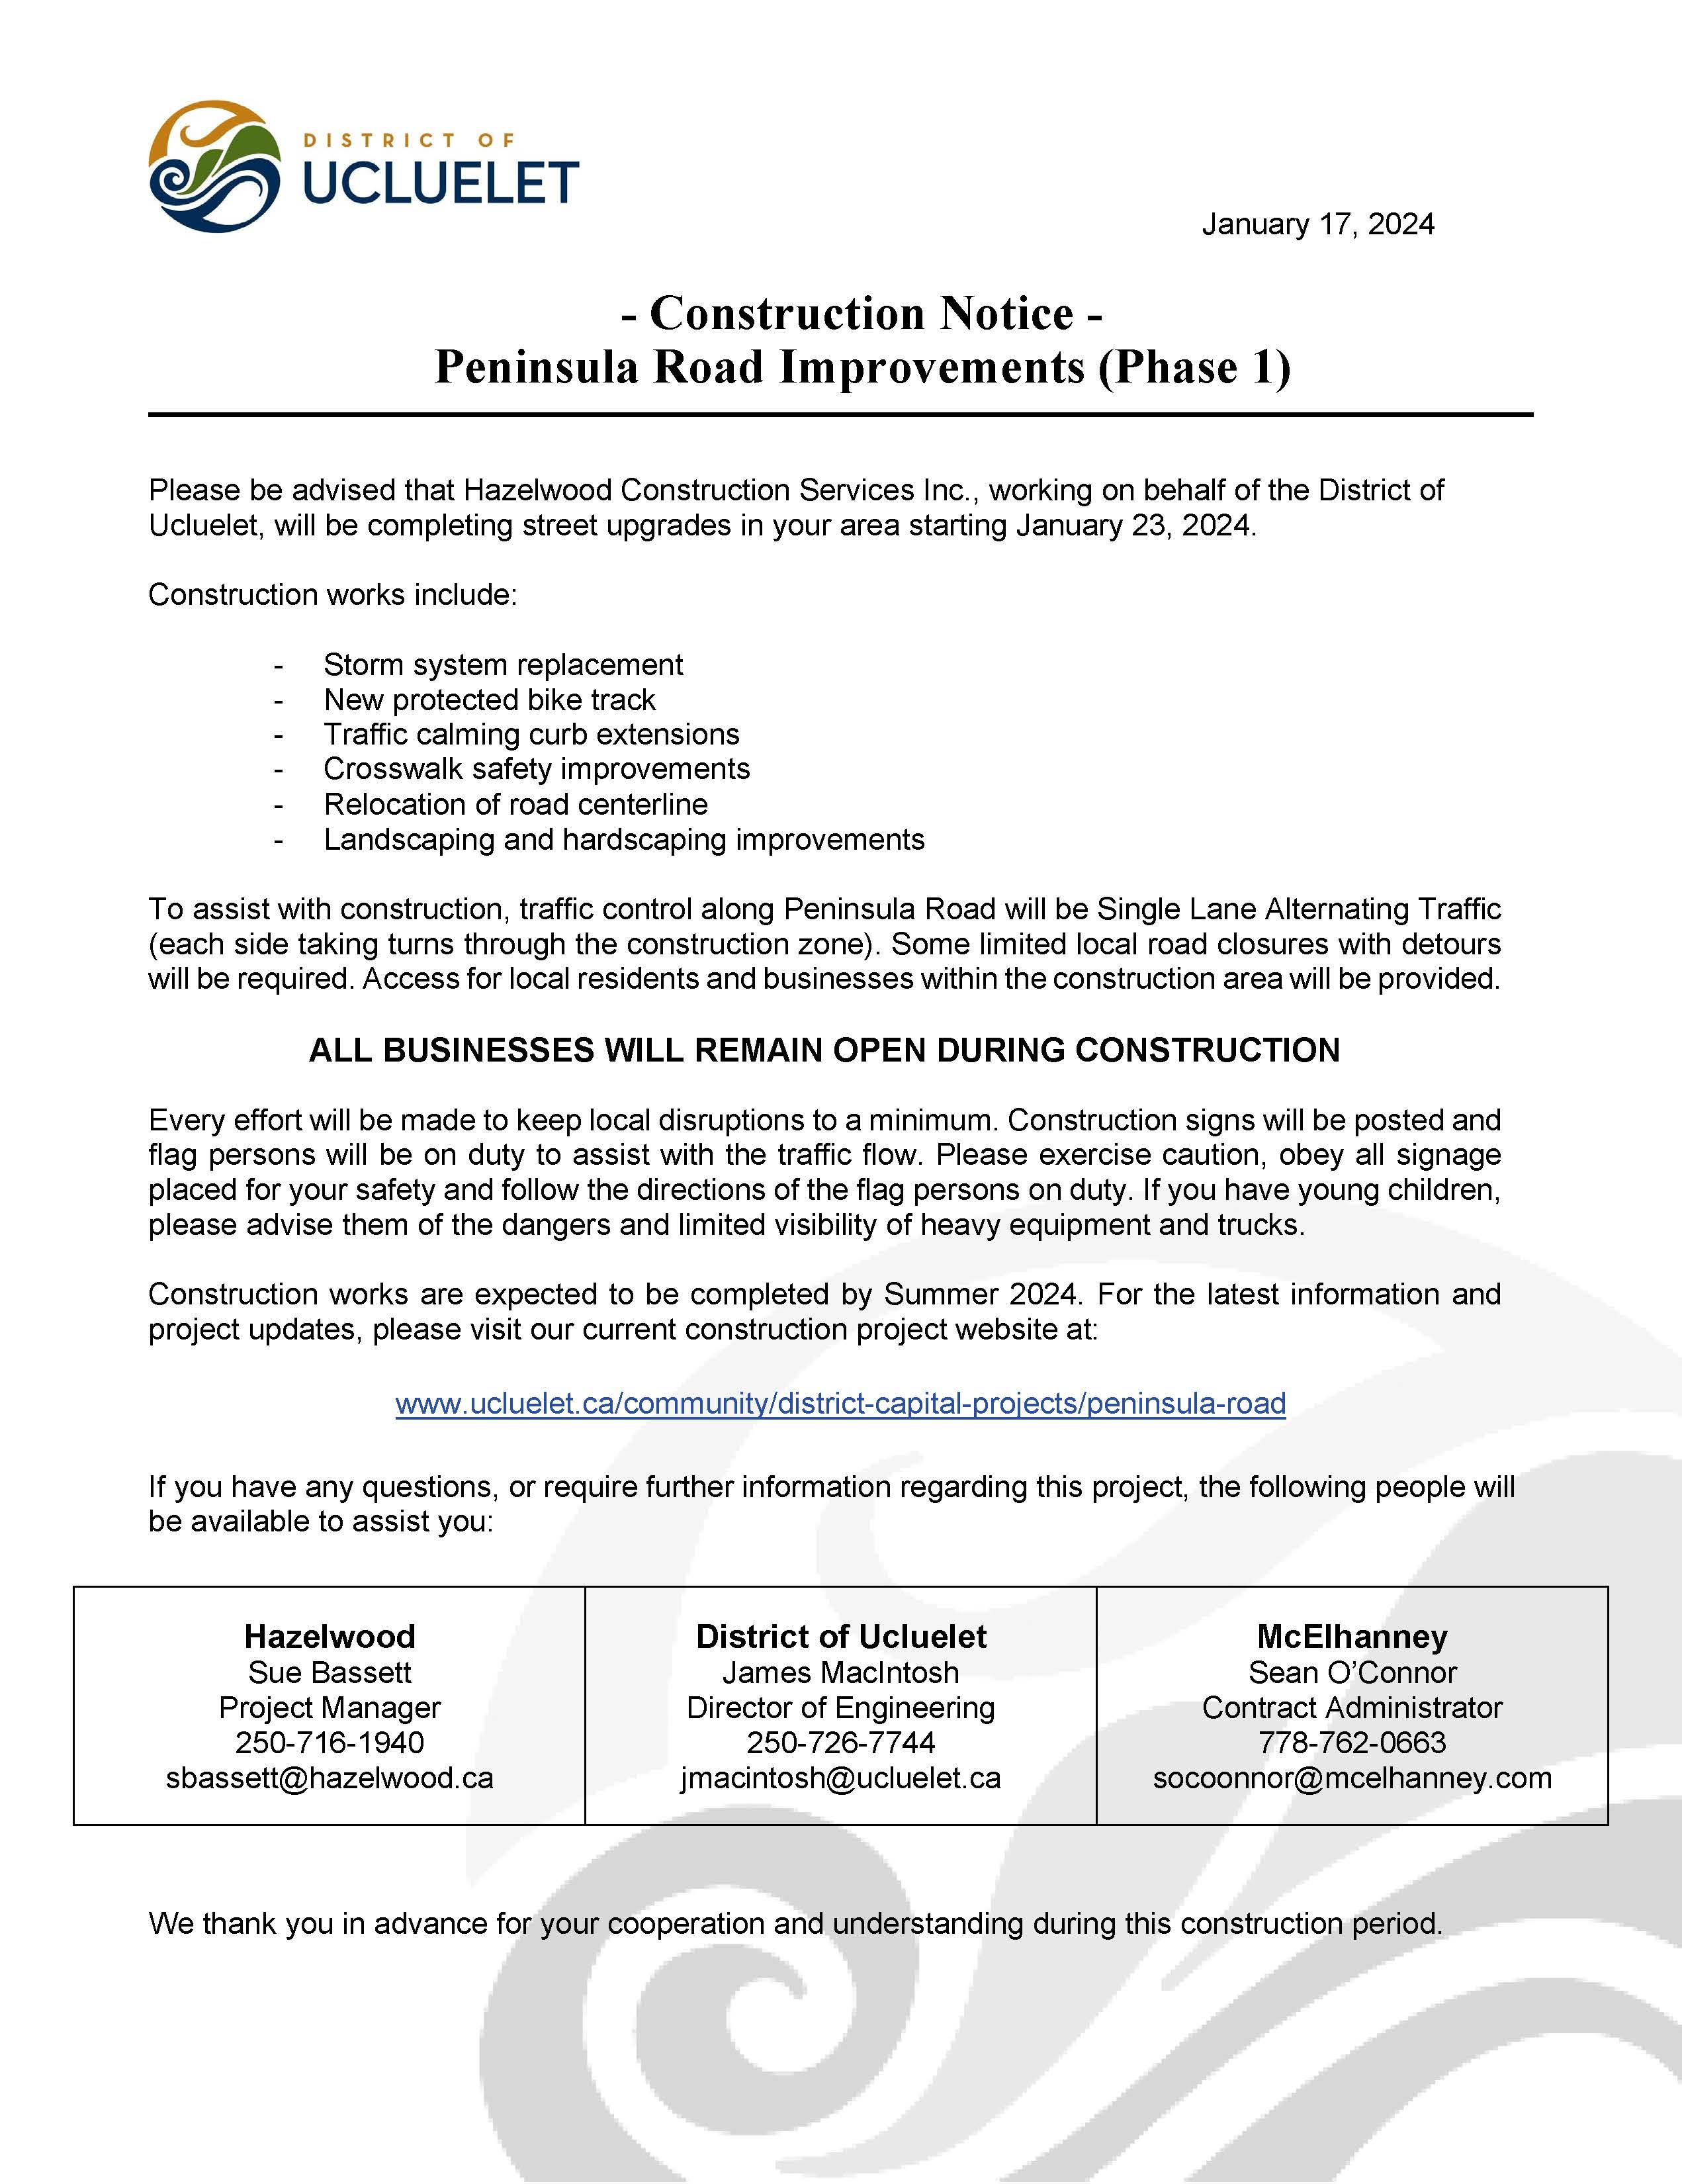 240117 Construction Notice Peninsula Road Improvements Phase 1 Page 1